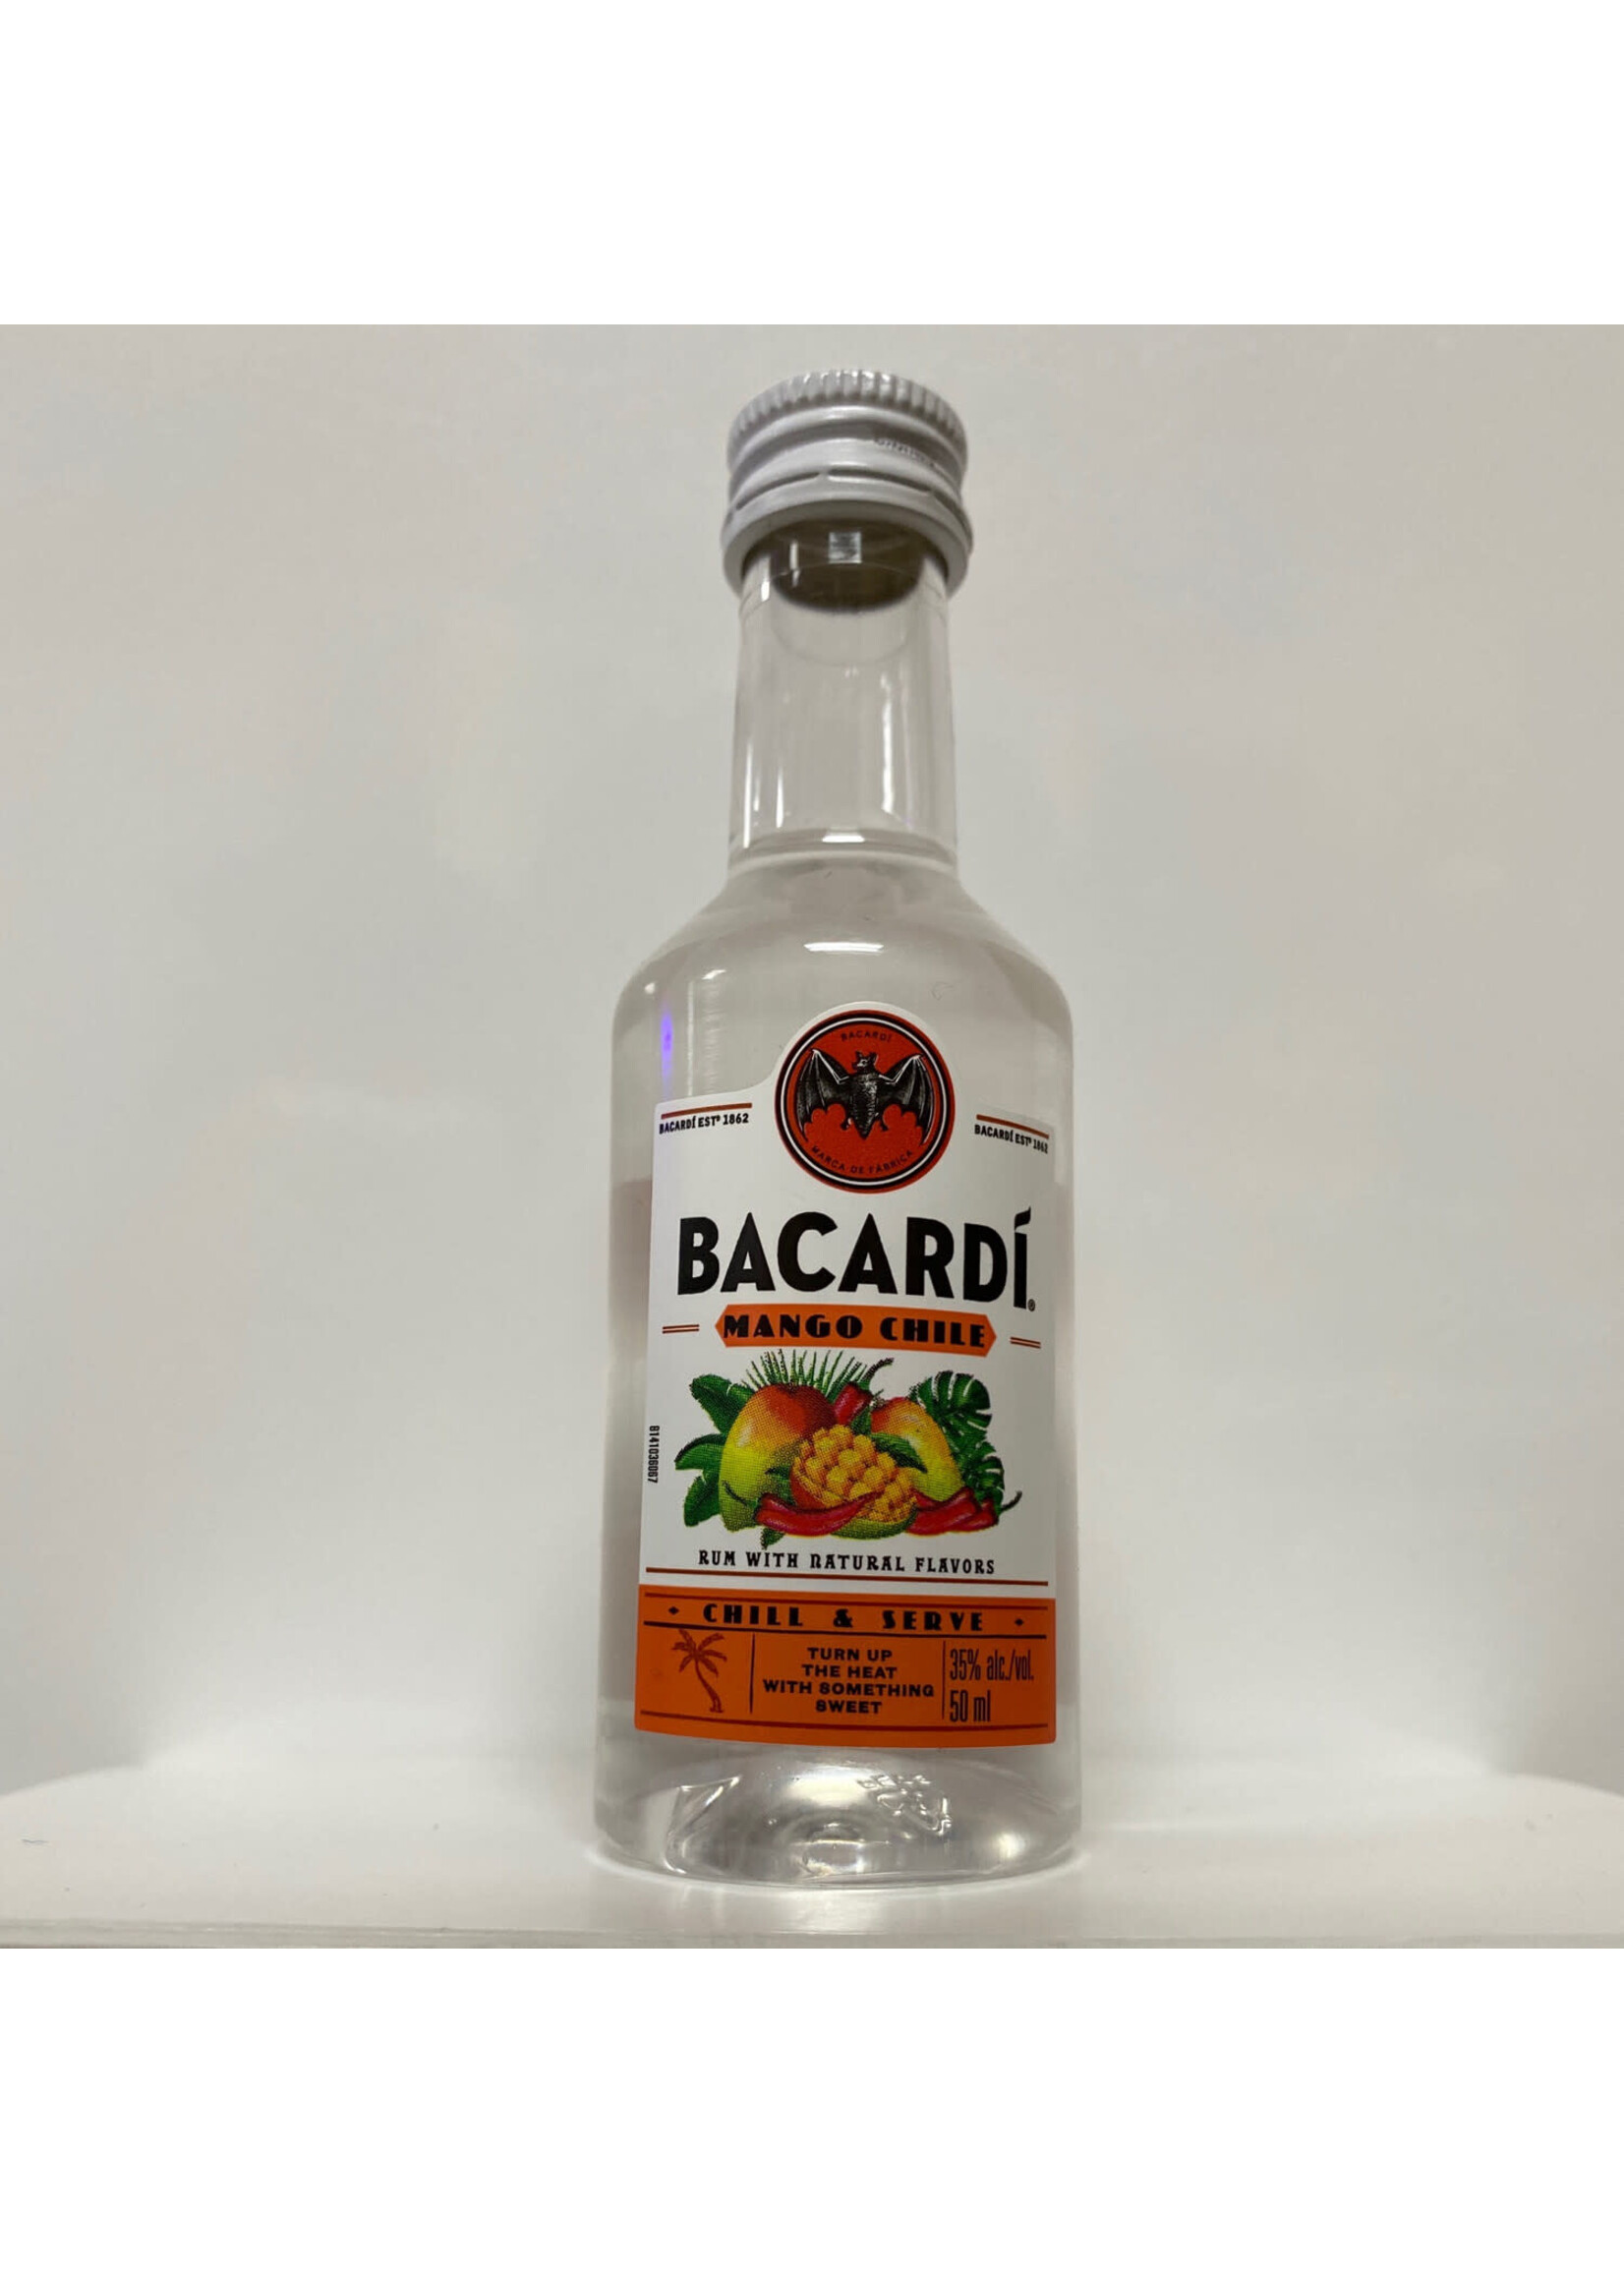 Bacardi Bacardi Mango Chile Rum 70Proof Pet 50ml